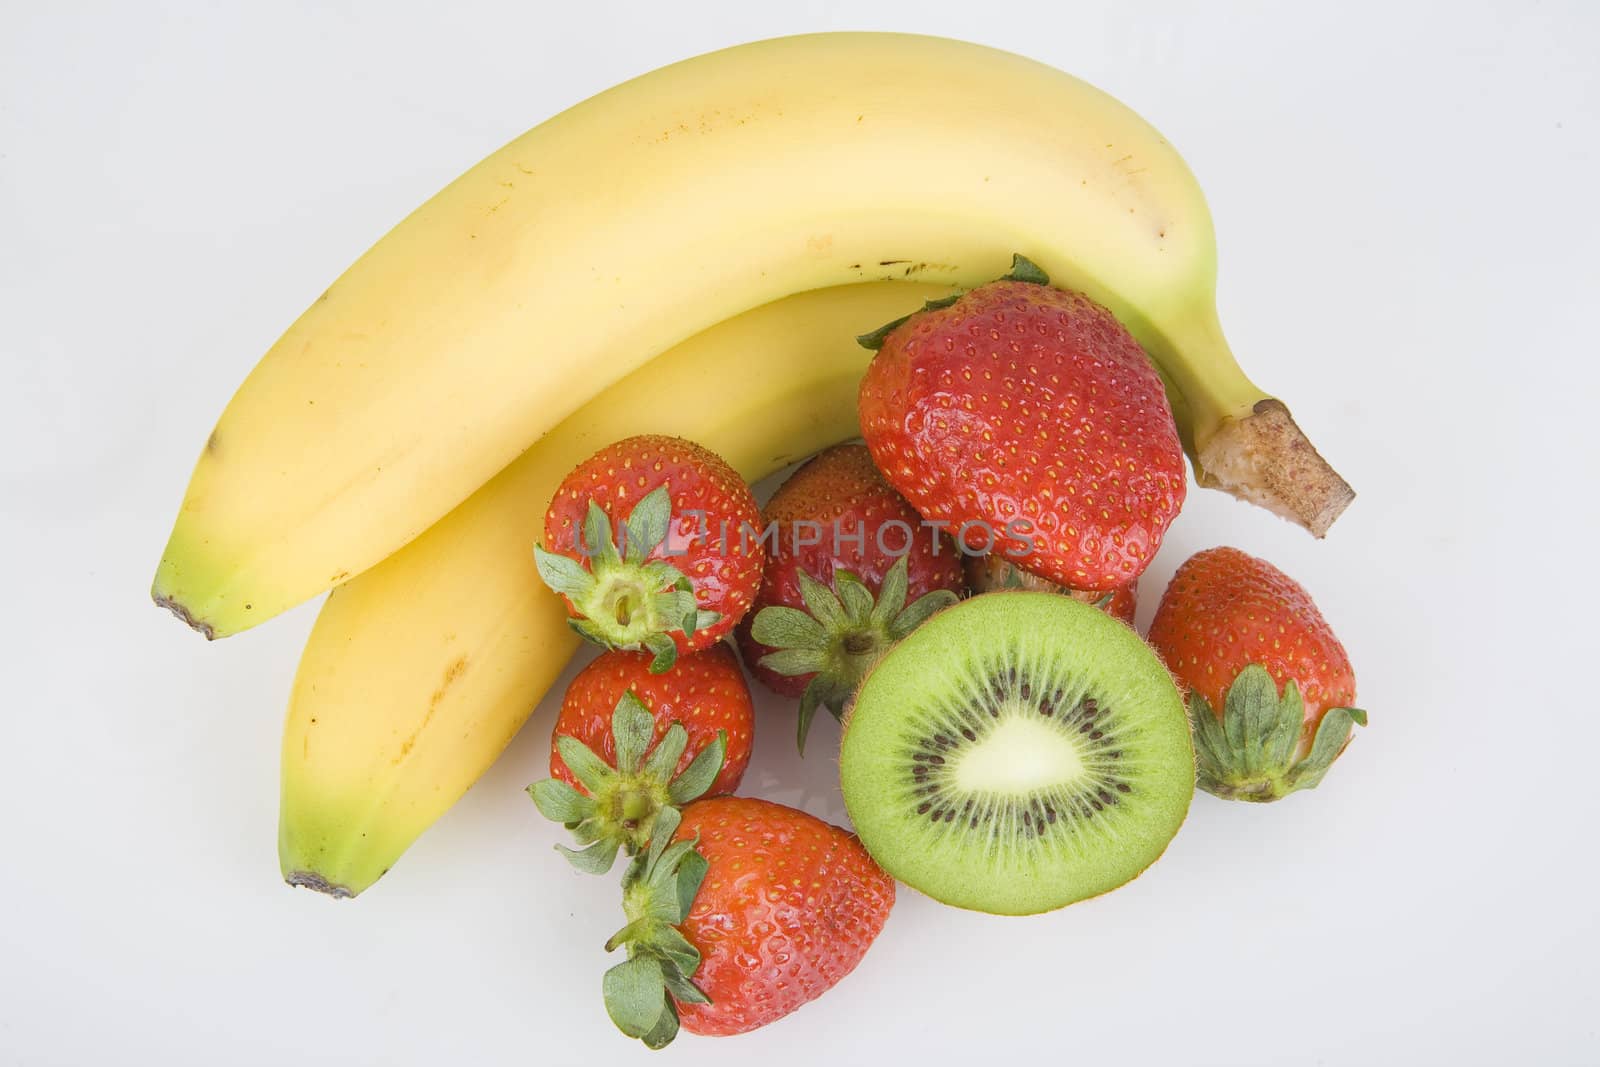 delicious fresh fruits: banana, strawberries and kiwi